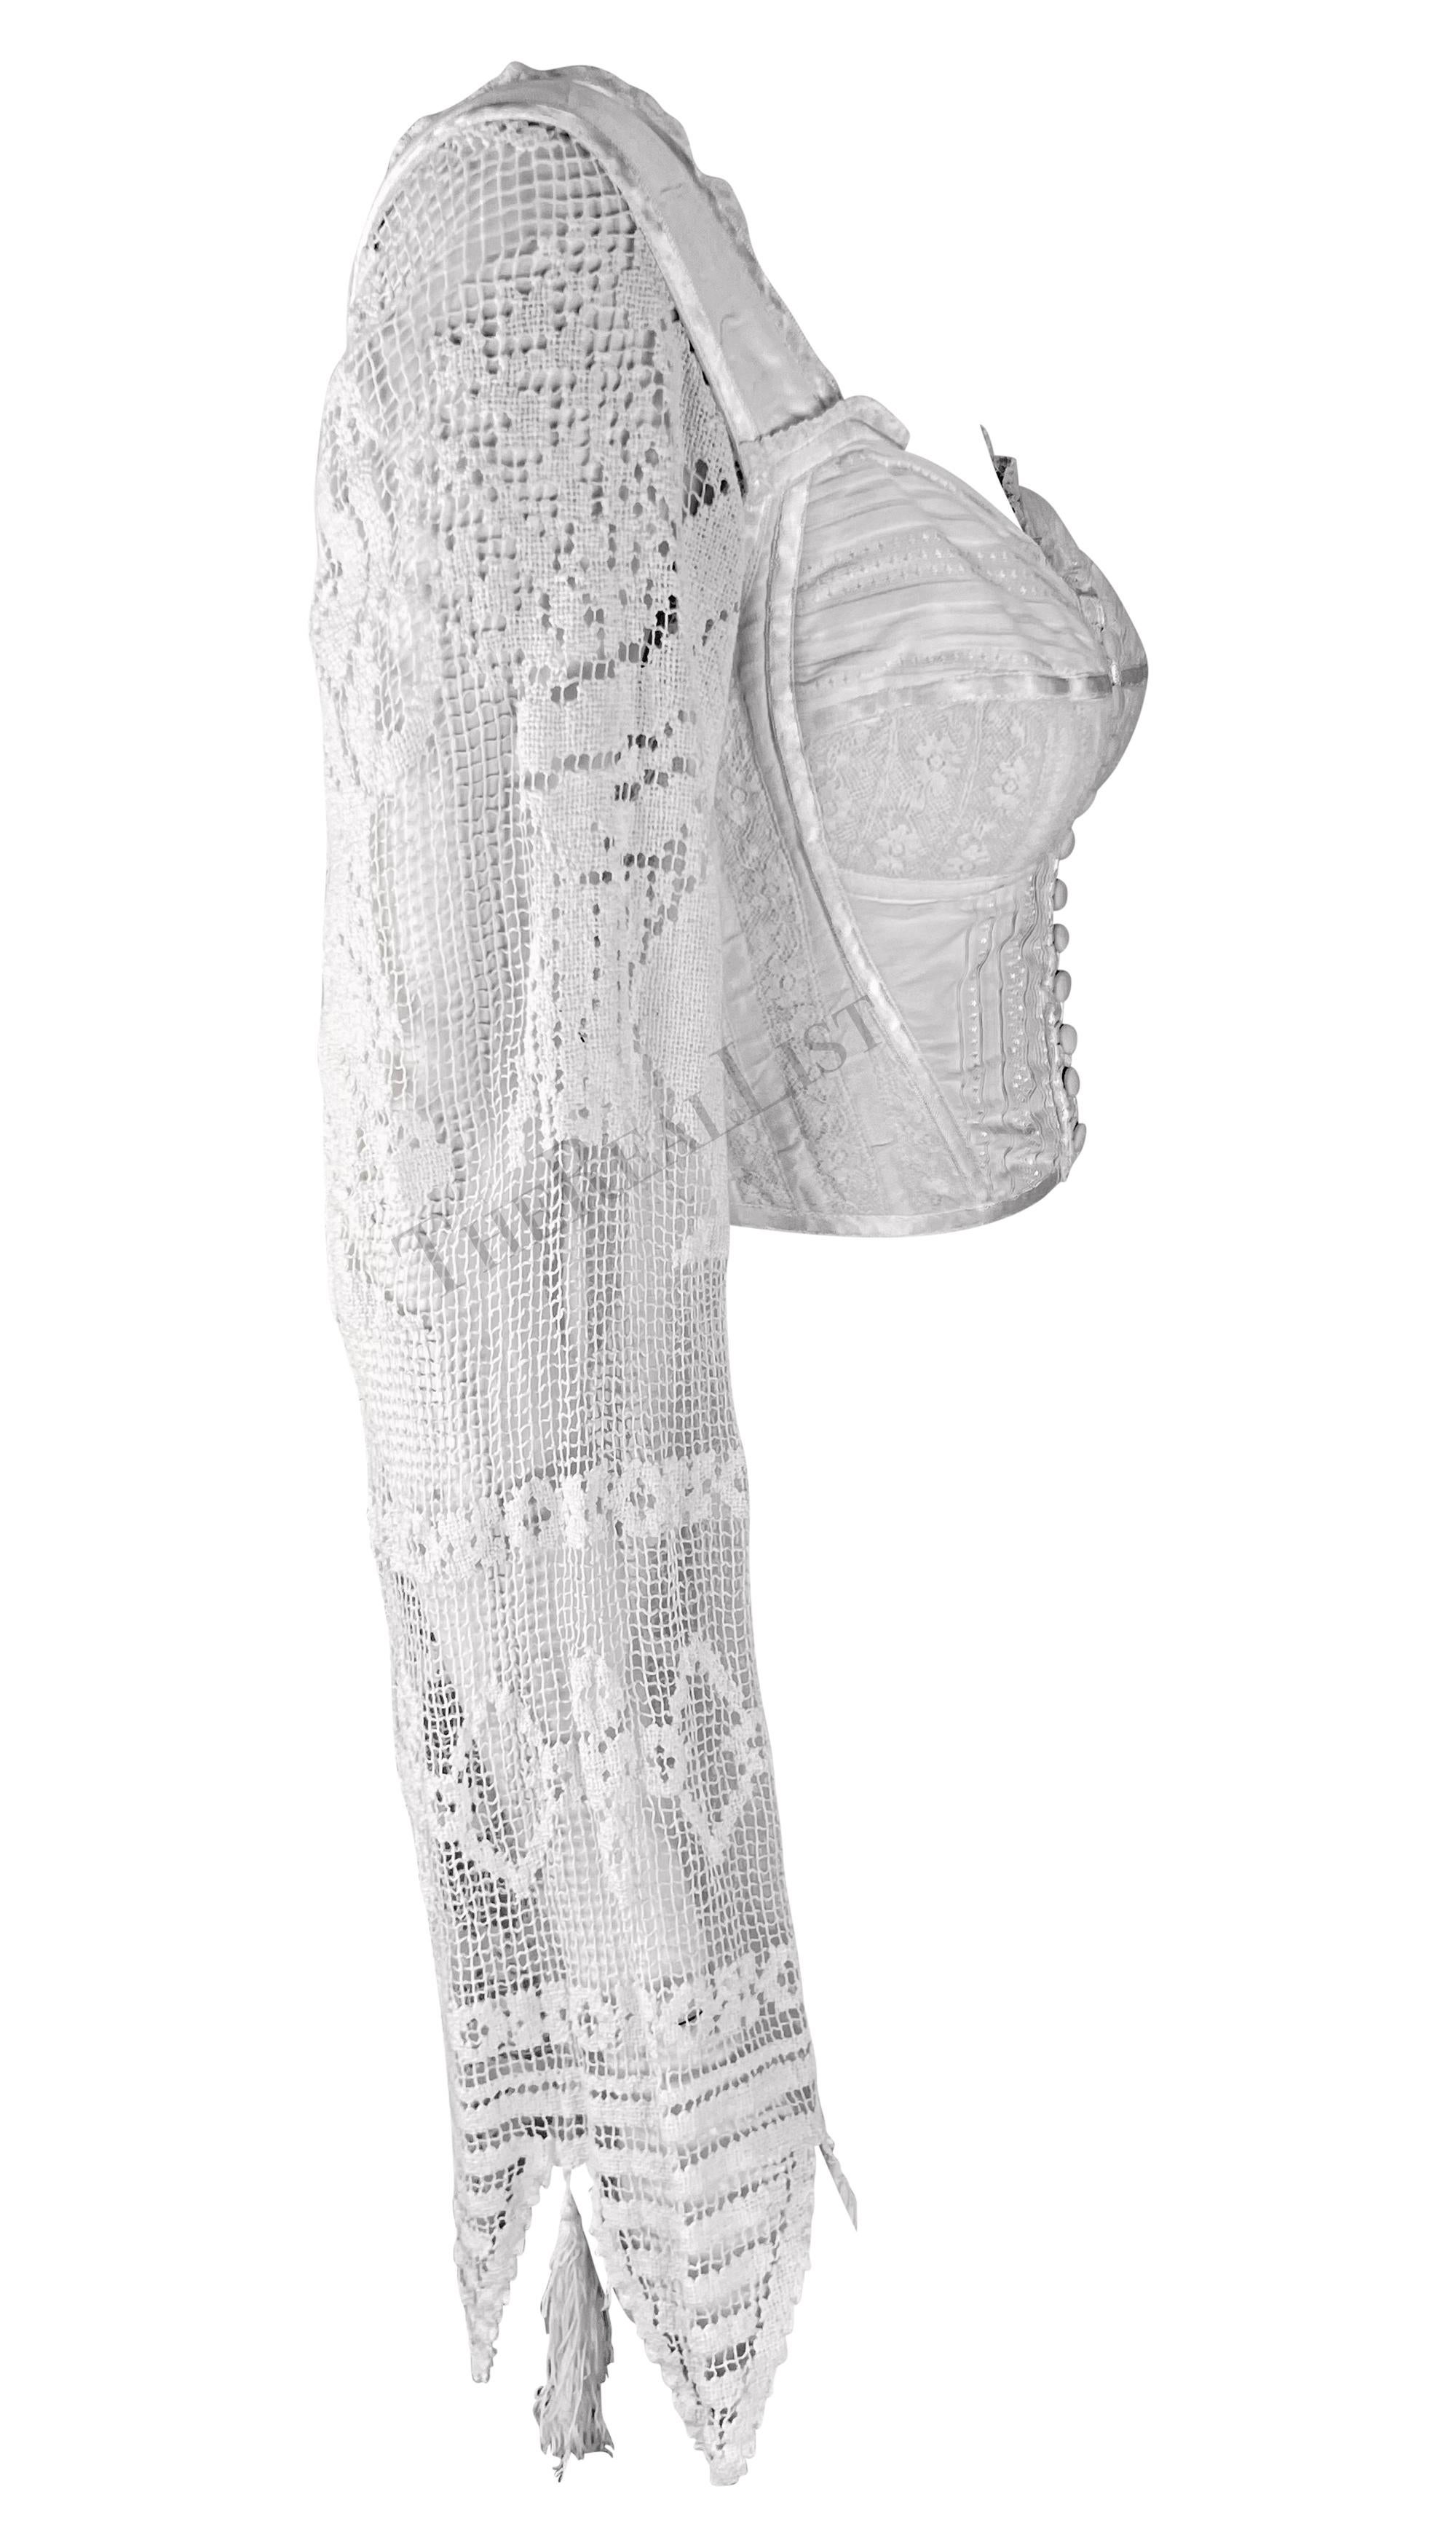 S/S 1994 Dolce & Gabbana White Crochet Tassel Bustier Boned Corset Crop Top For Sale 2